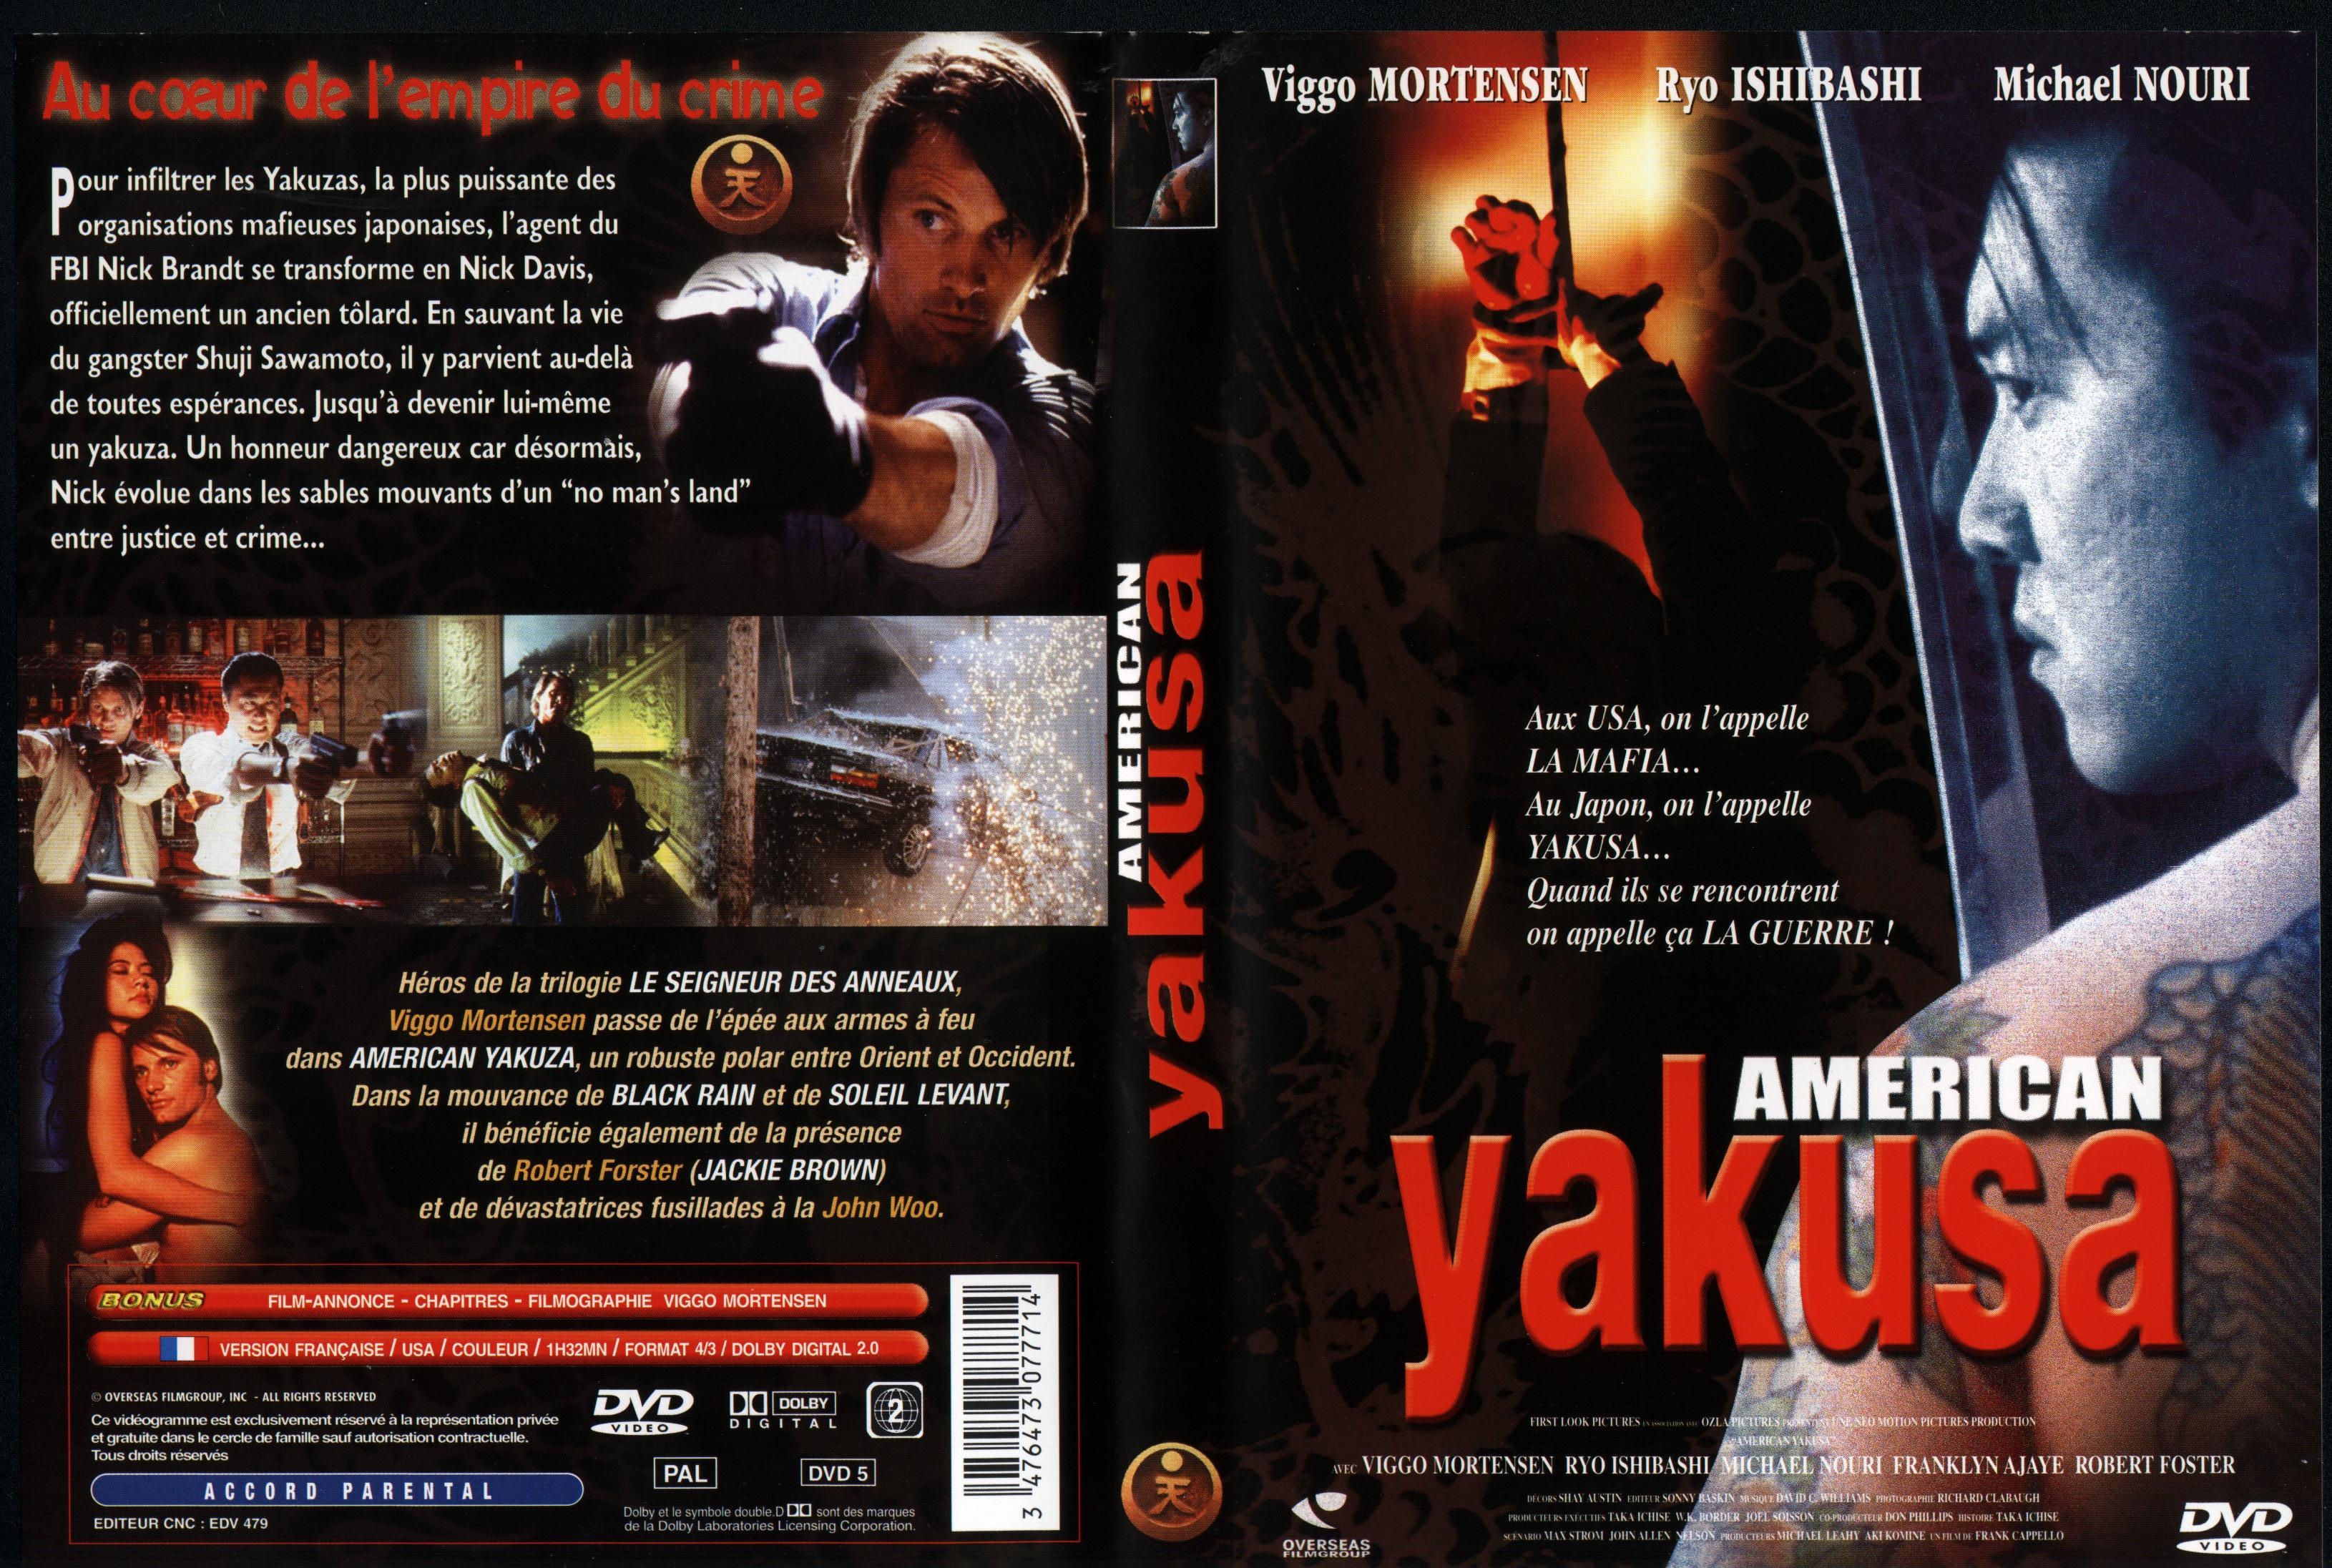 Jaquette DVD American yakusa